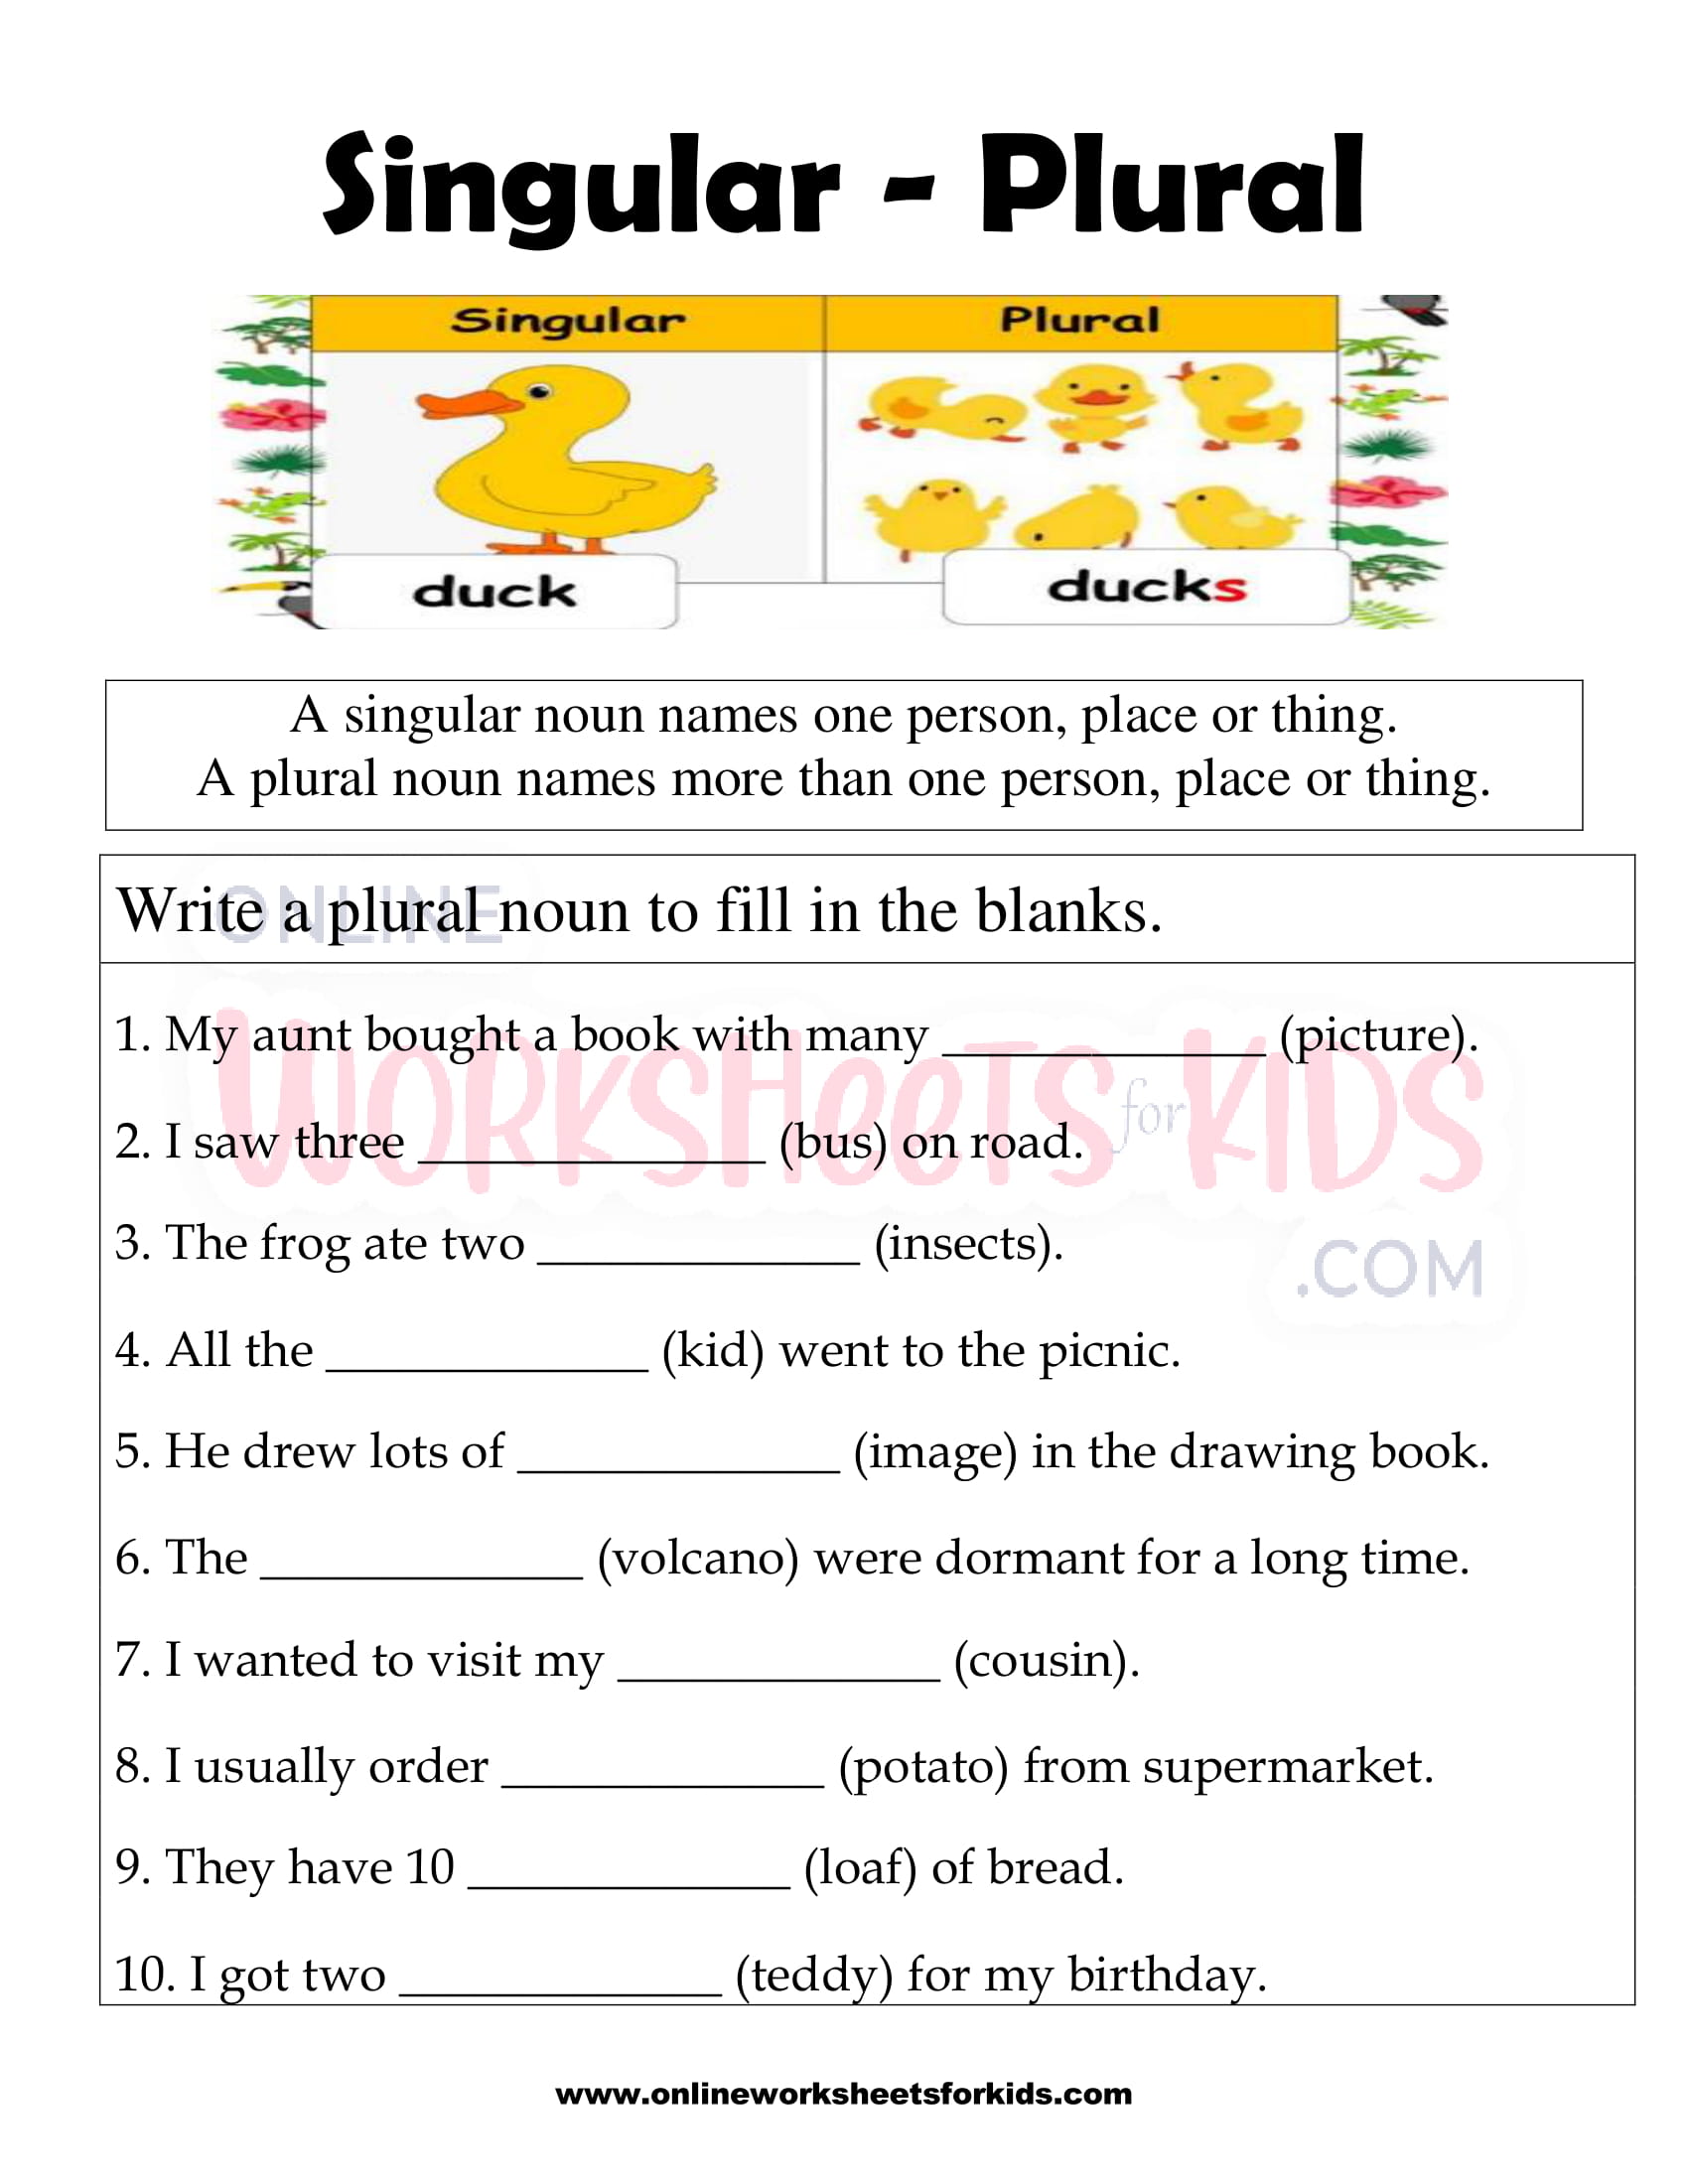 singular-and-plural-nouns-fb-worksheet-5